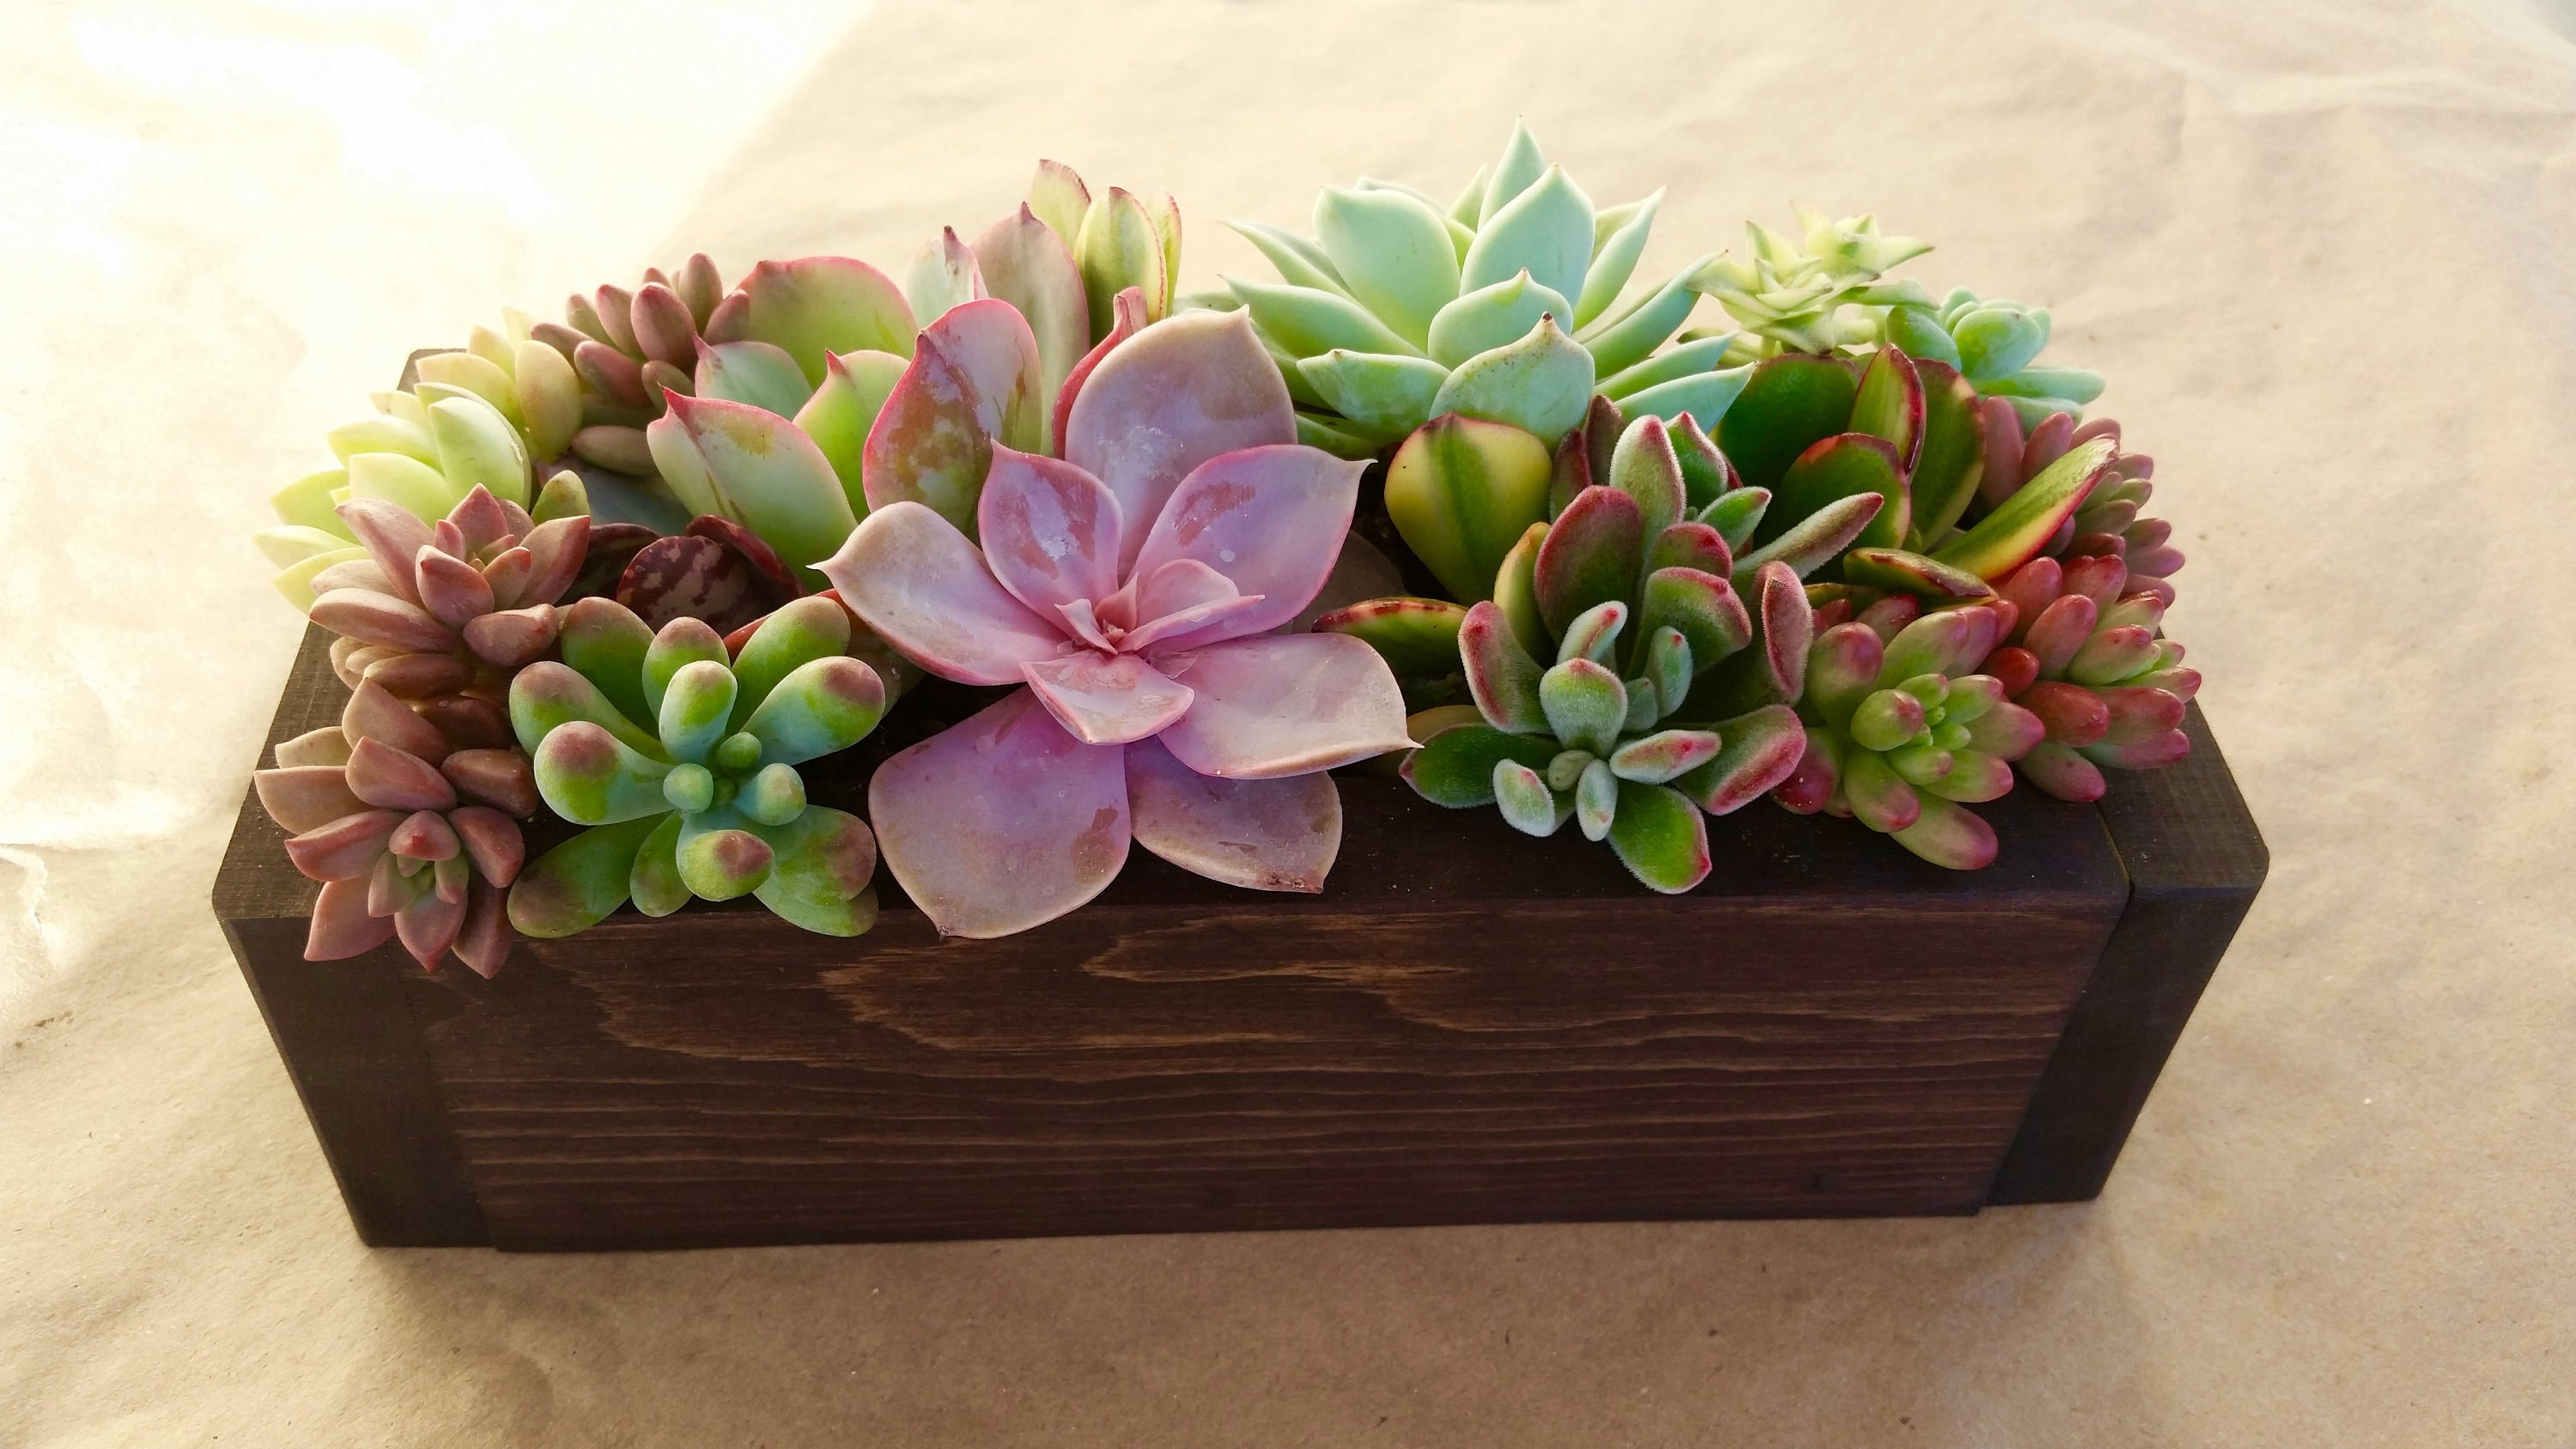 Best ideas about Succulent Planter Box
. Save or Pin 9 SUCCULENT planter box centerpiece Mother s Day Now.